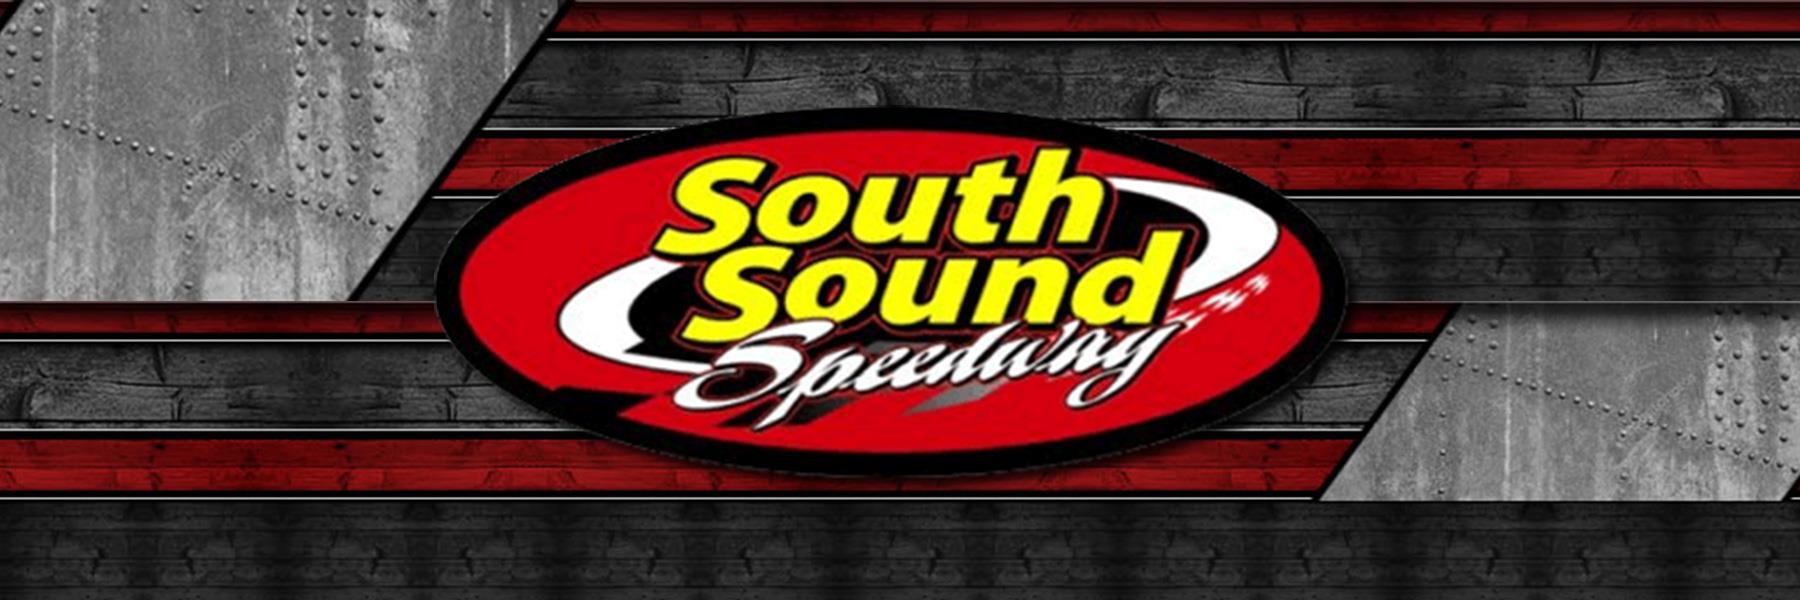 5/25/2022 - South Sound Speedway